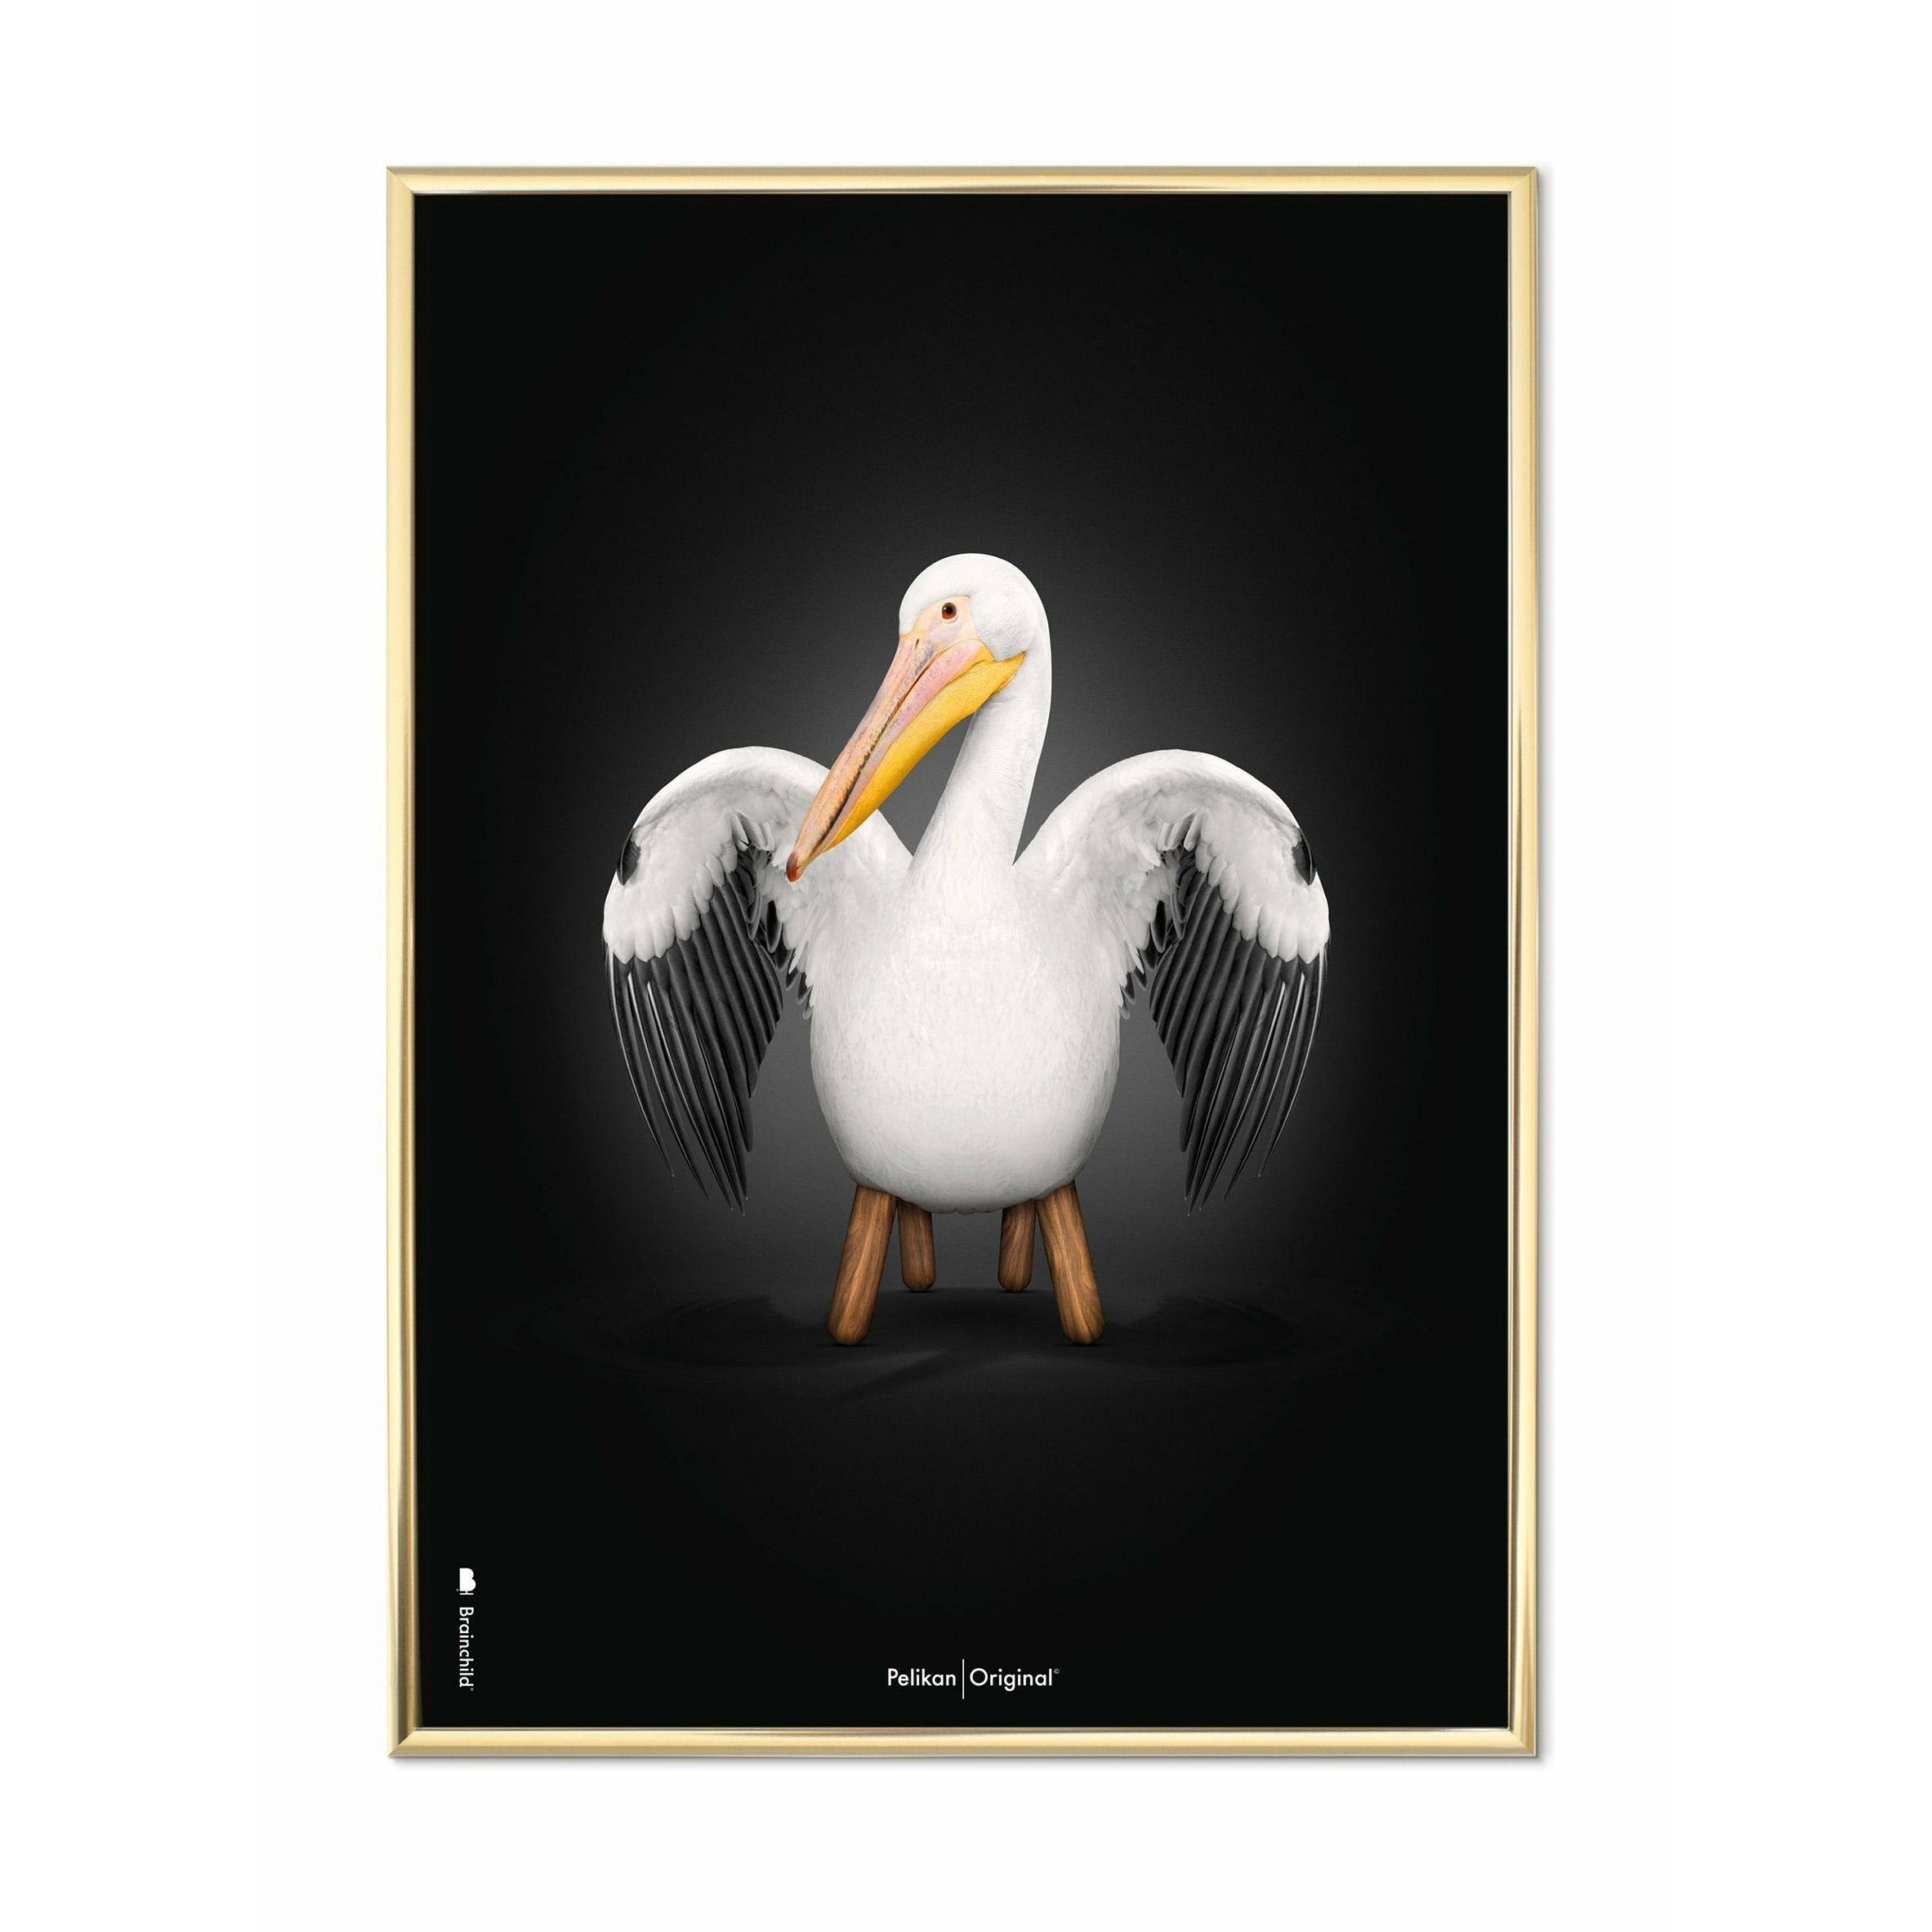 Brainchild Pelikan Classic Poster, Brass Colored Frame A5, Black Background